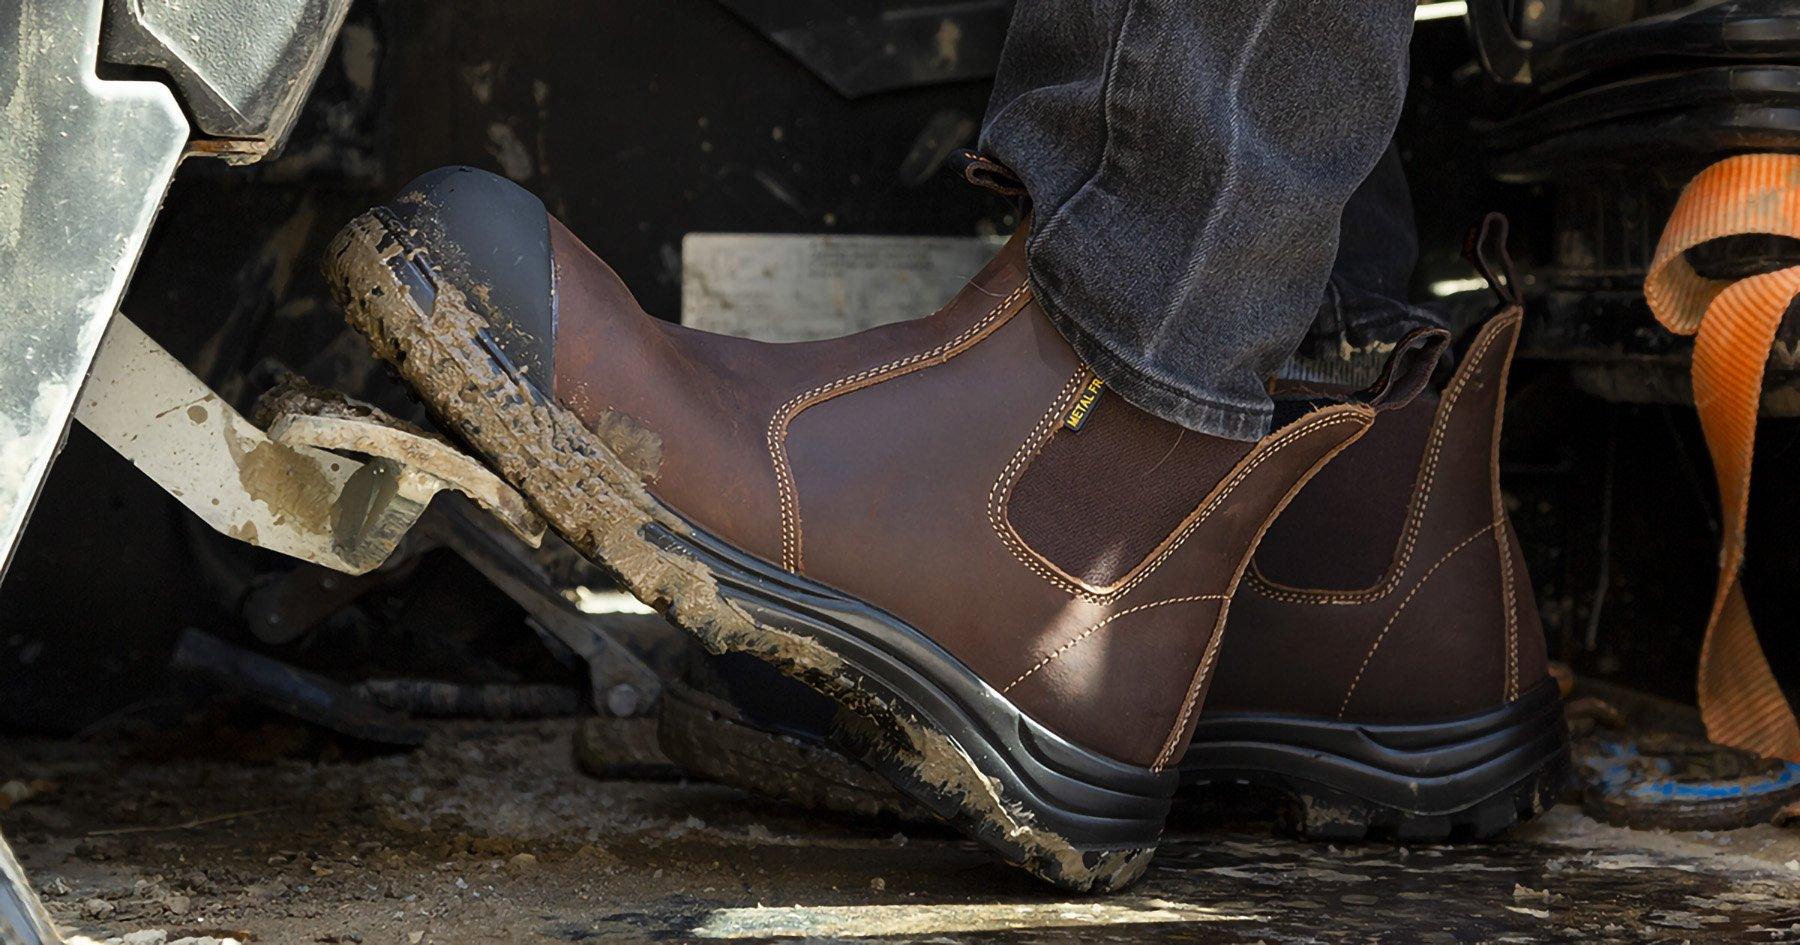 Steel Toe Work Boots in Ottawa - MooseLog